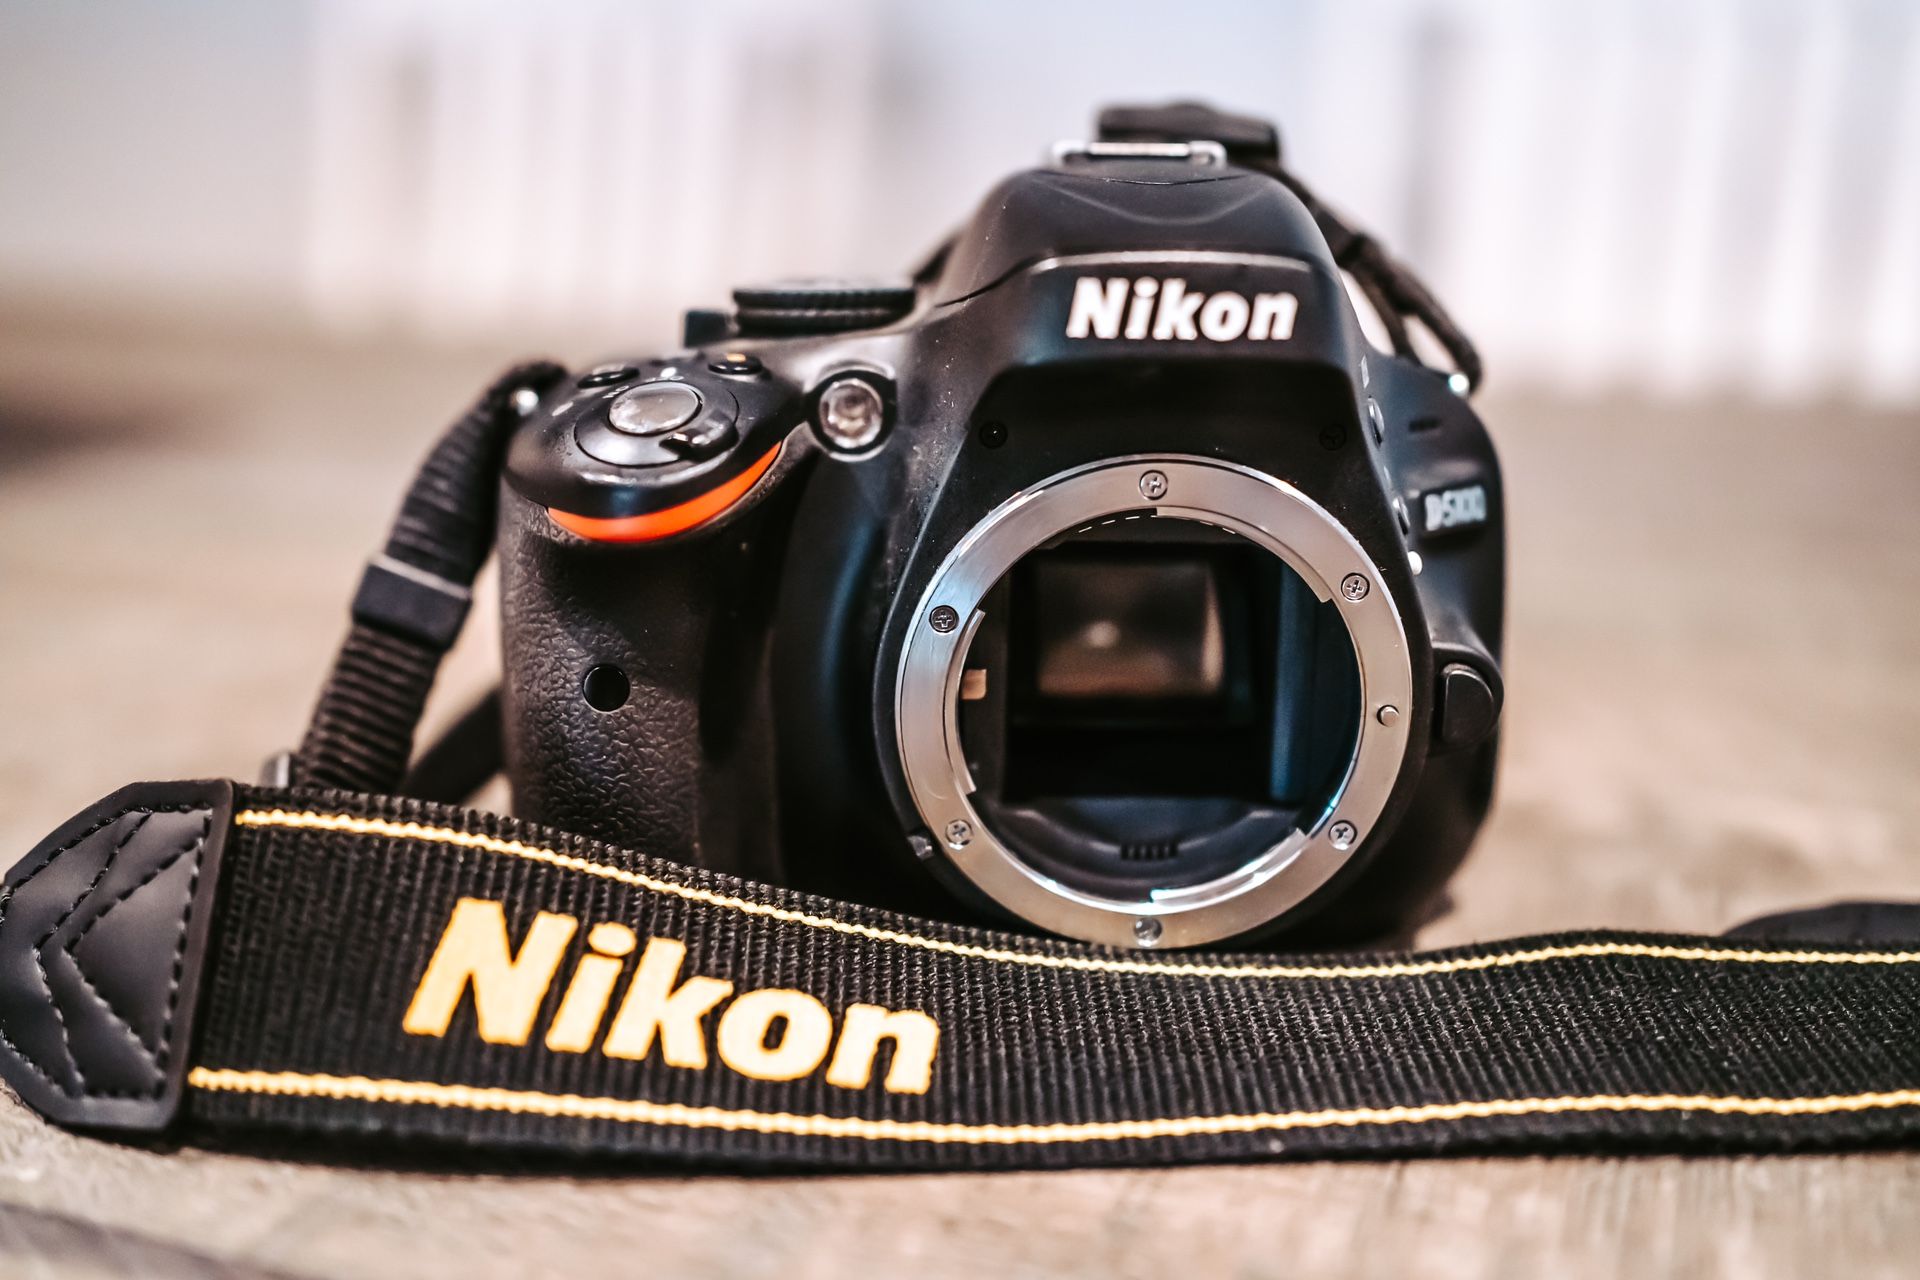 Nikon D5100 Camera Body 